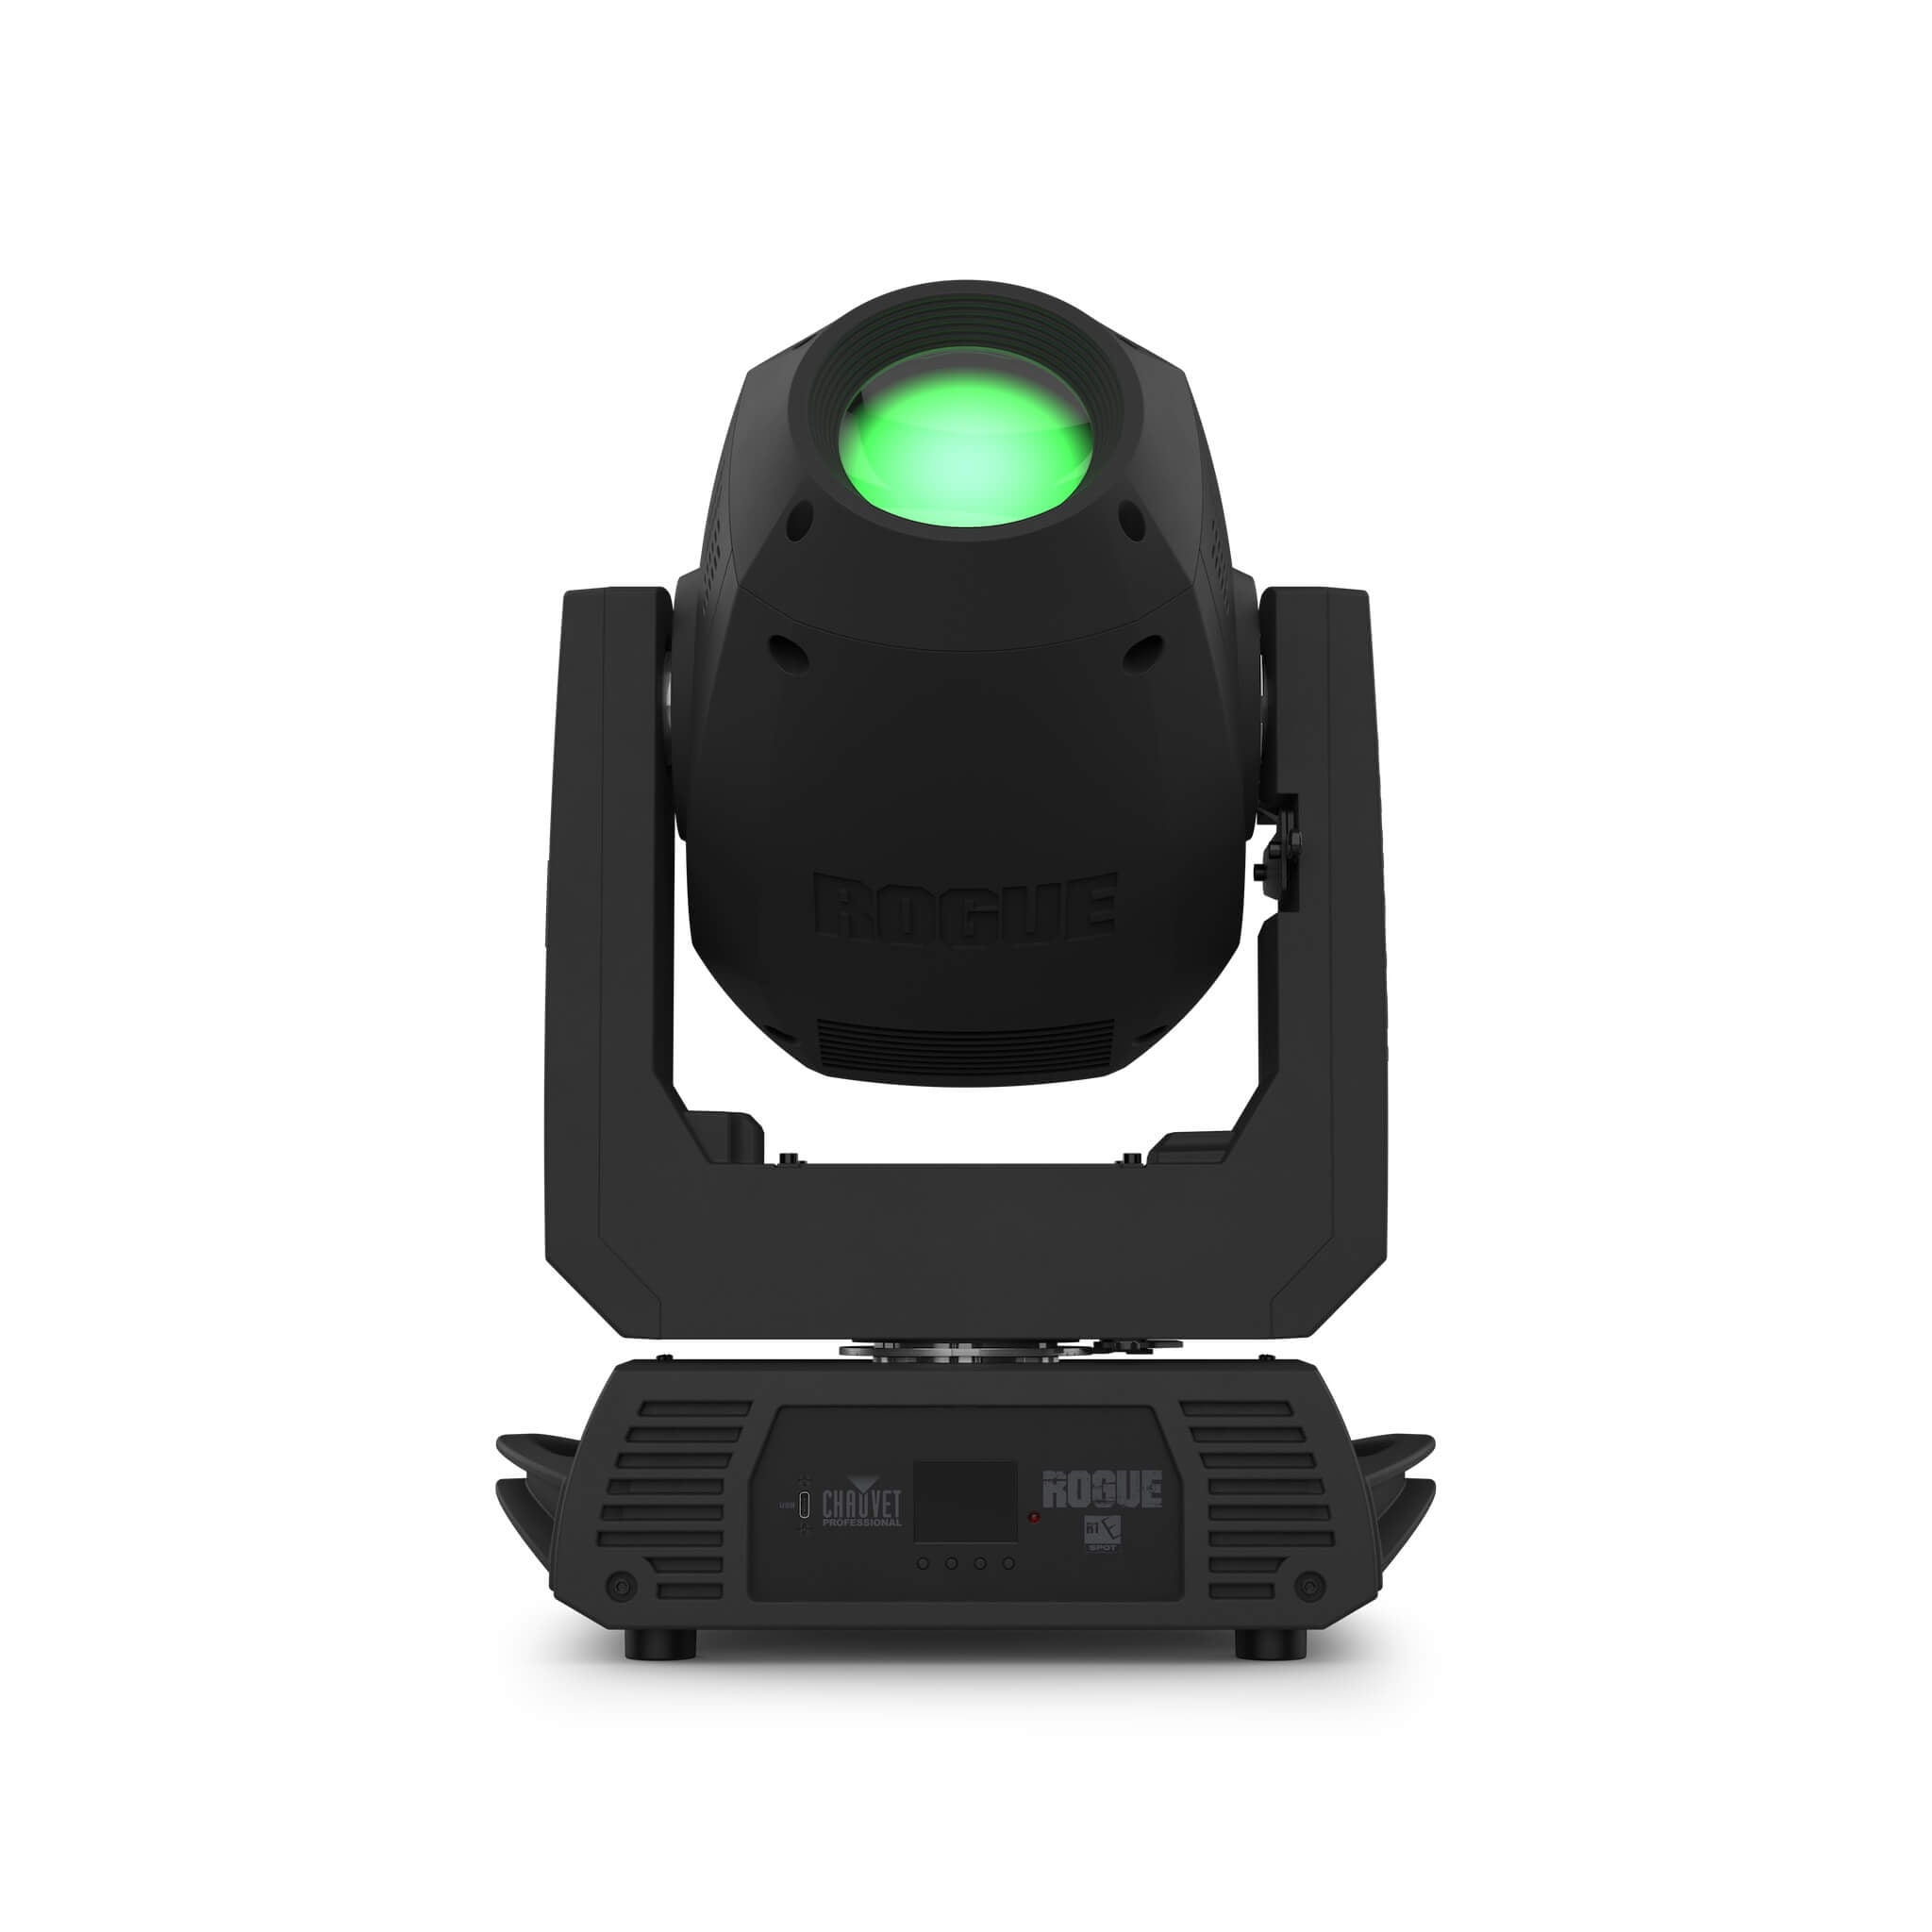 Chauvet Professional Rogue R1E Spot - 200W LED Moving Head Fixture, front